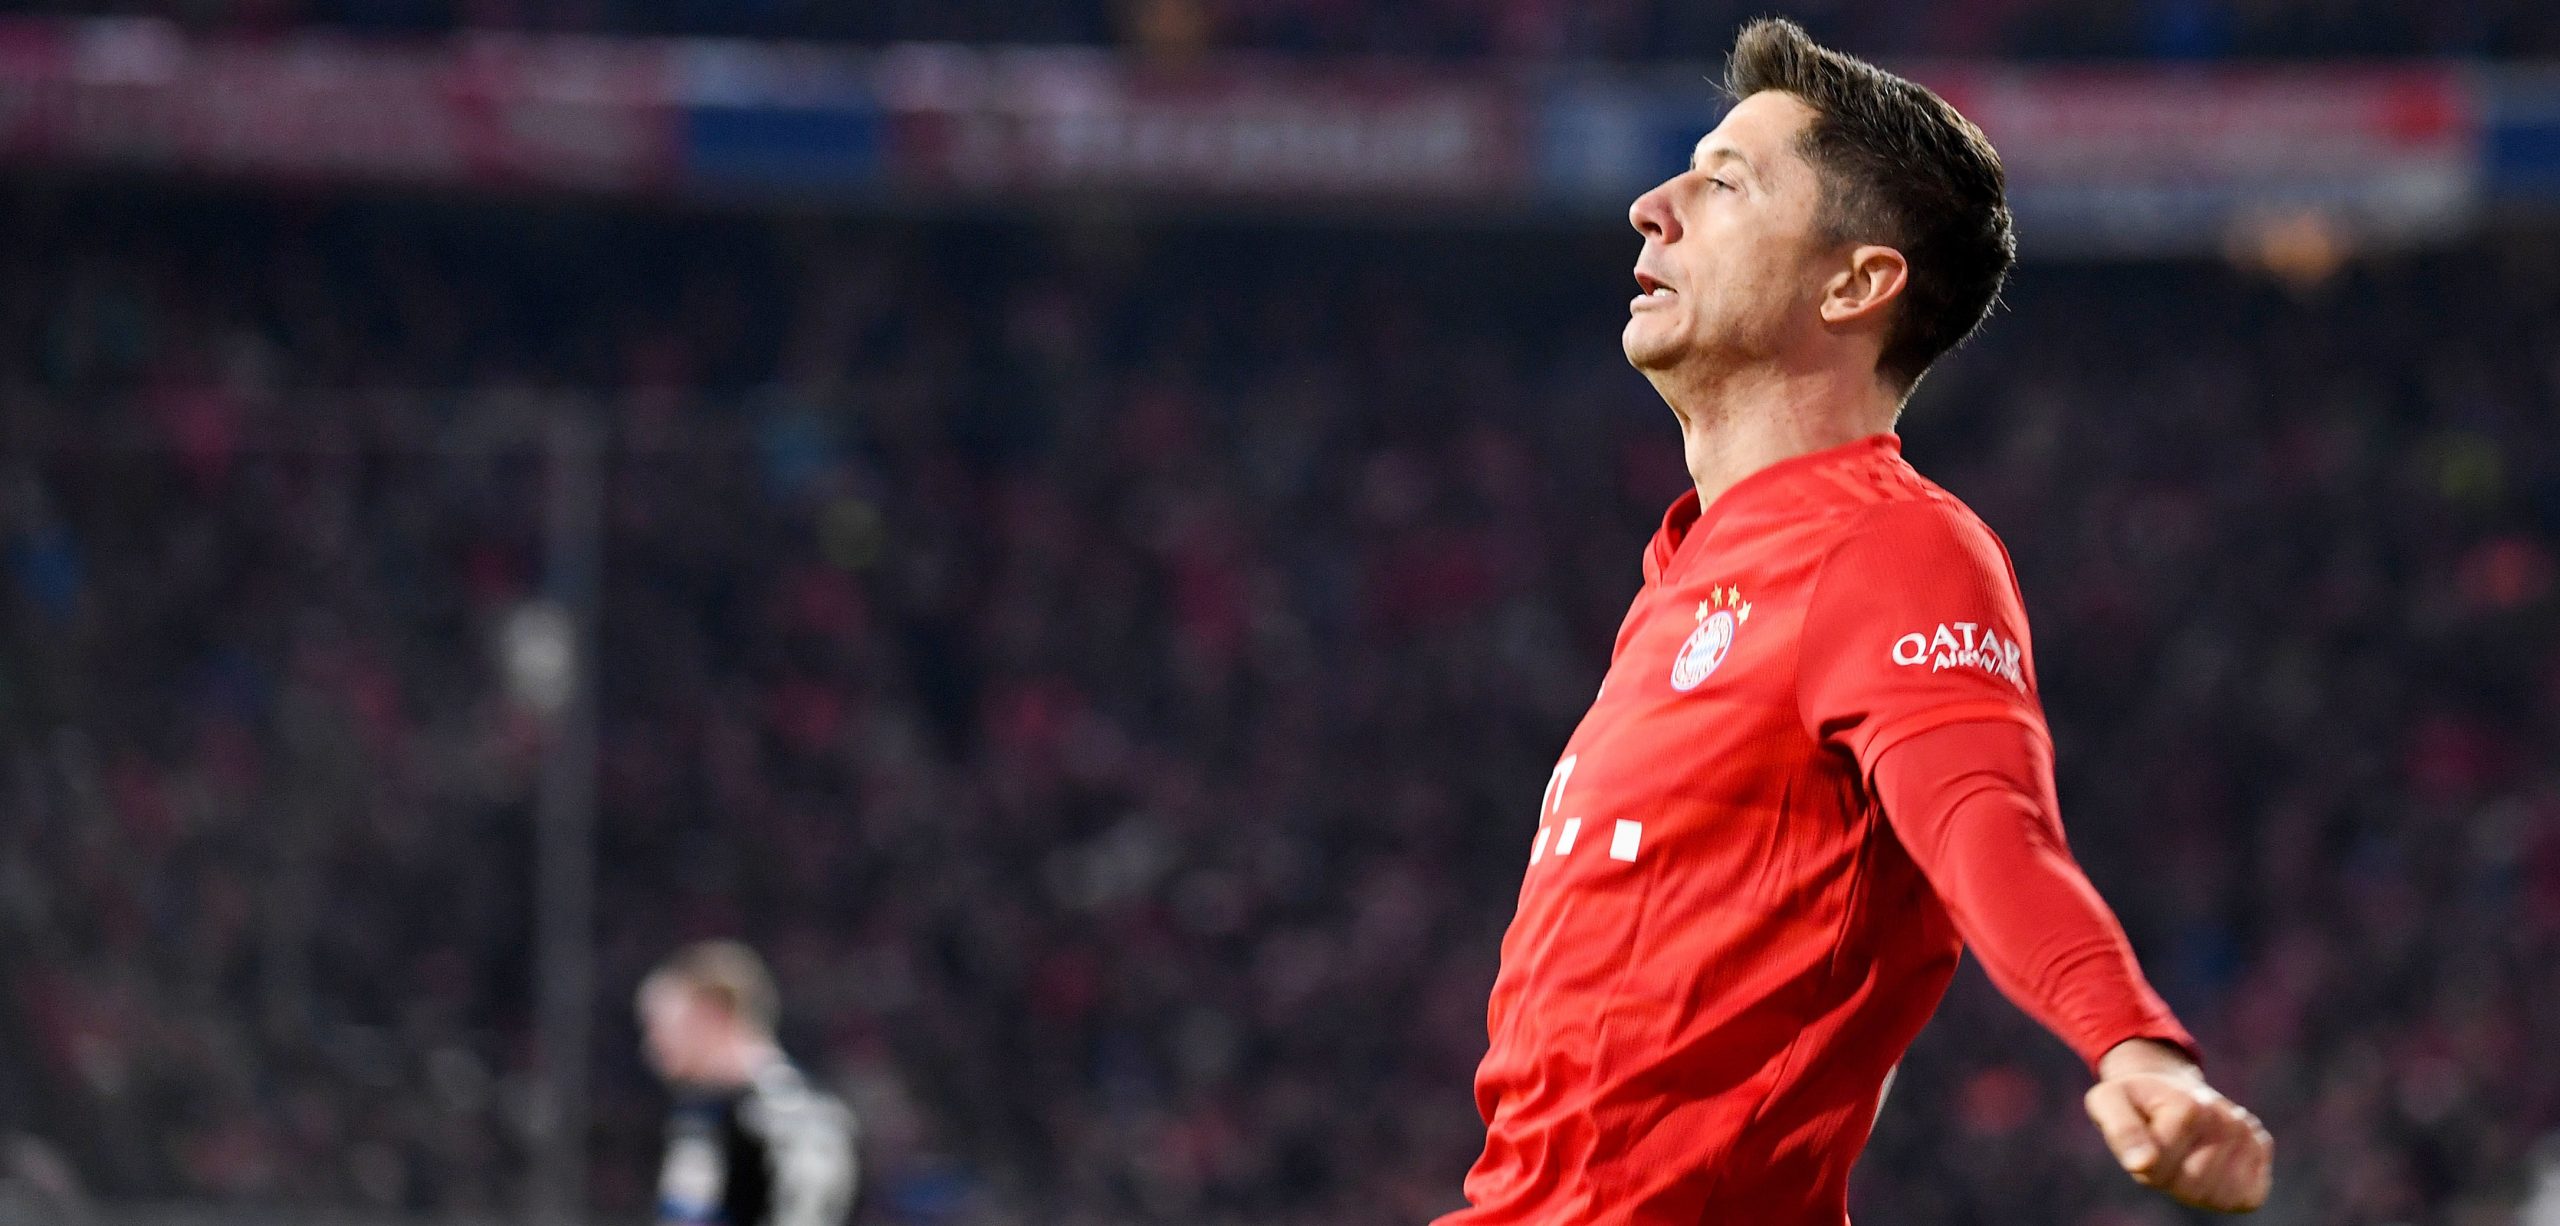 FC-Bayerns-Robert-Lewandowski-scores-another-one-in-the-Bundesliga